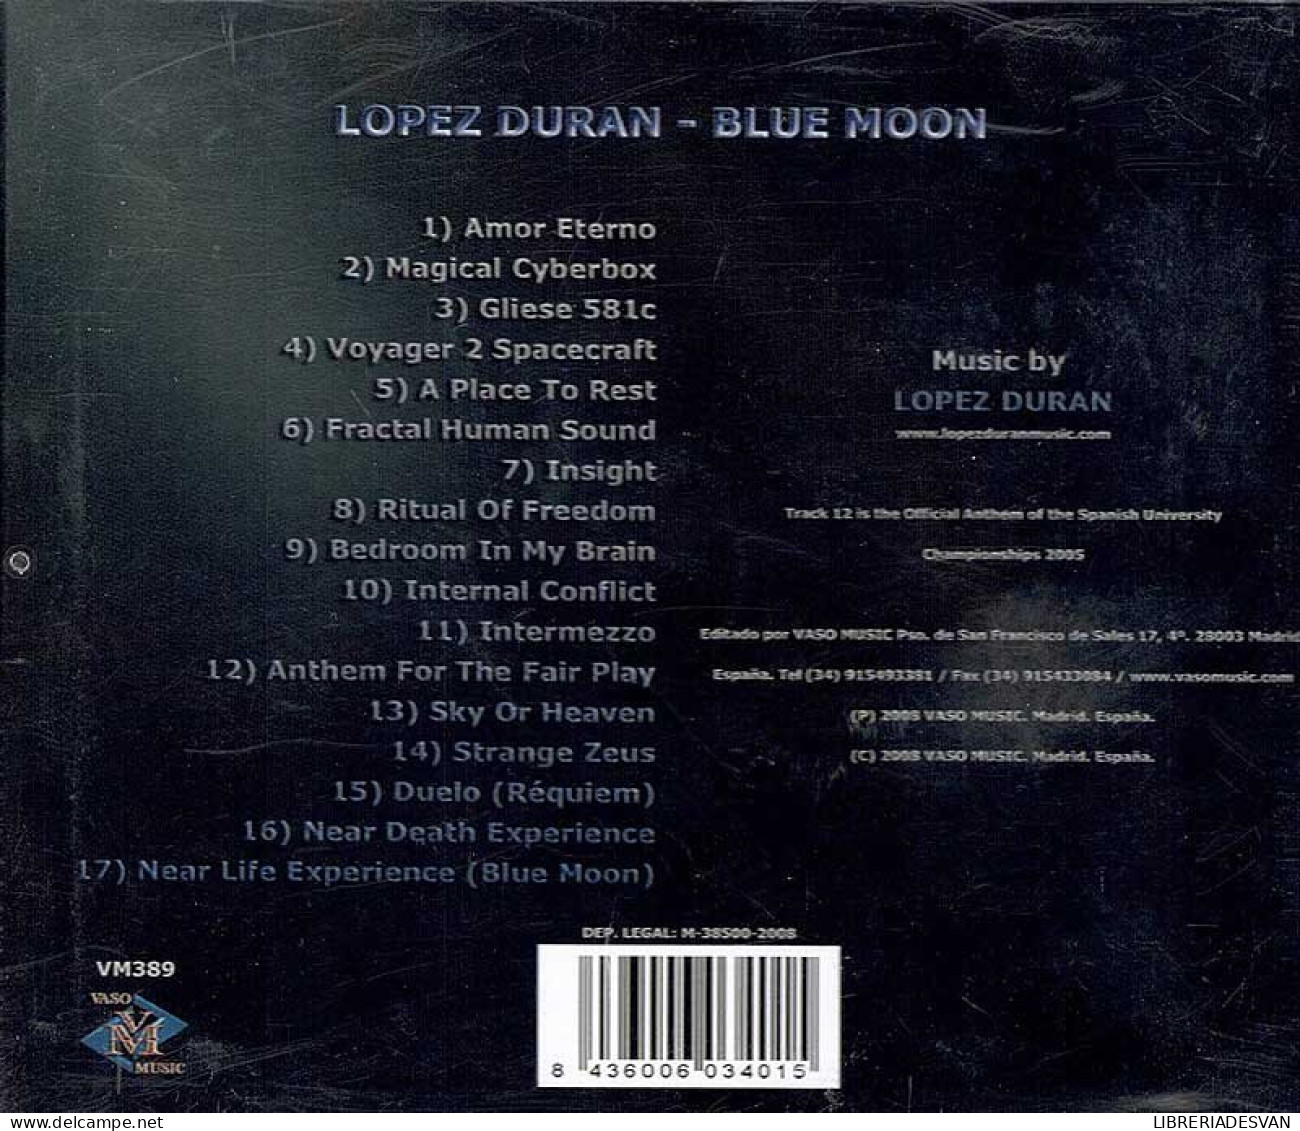 Lopez Duran - Blue Moon. CD - New Age